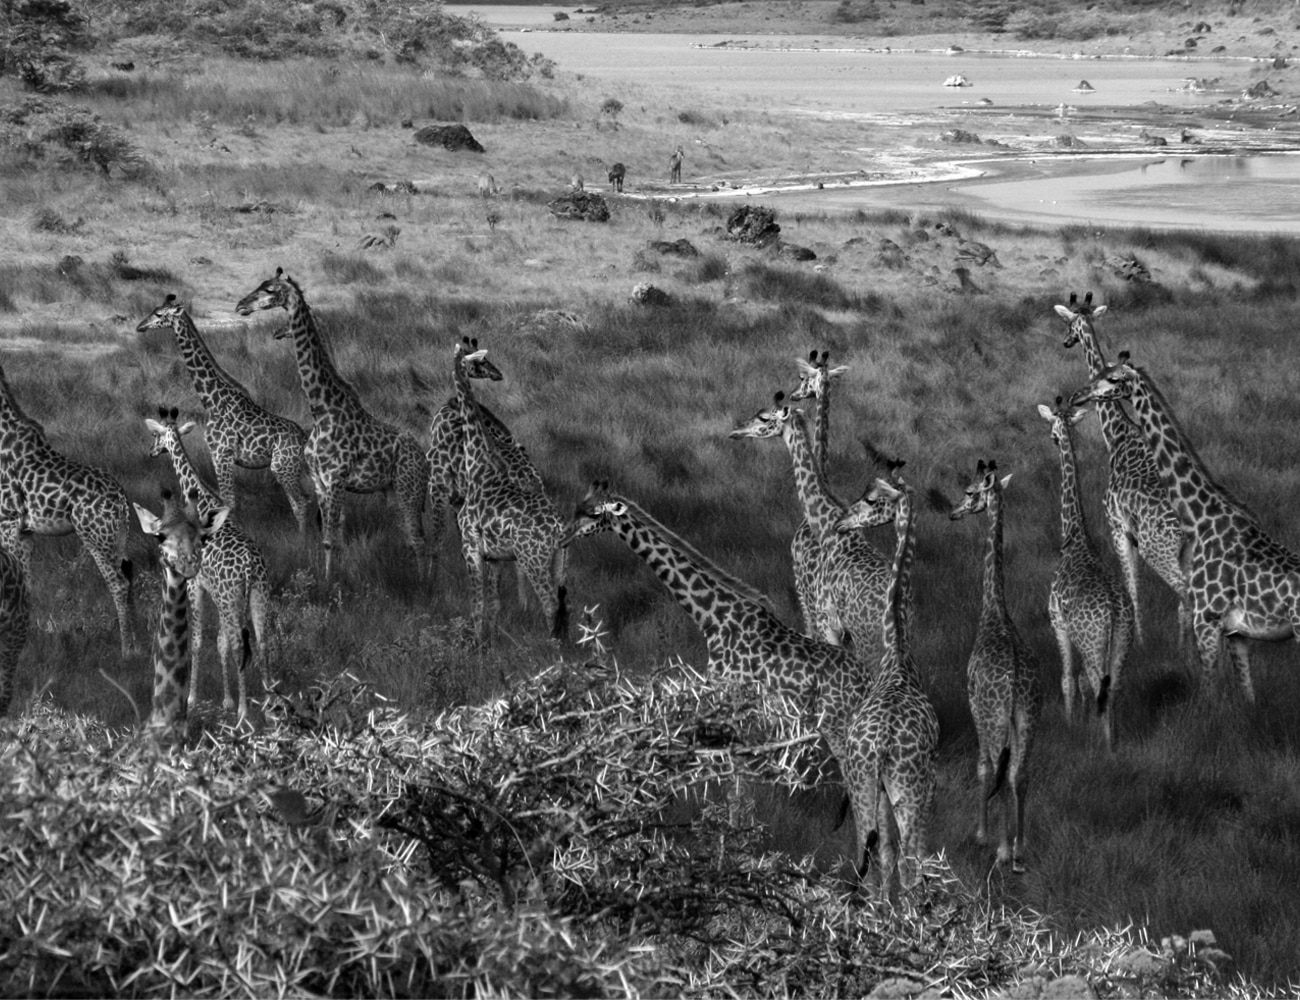 Giraffes at Arusha National Park Tanzania